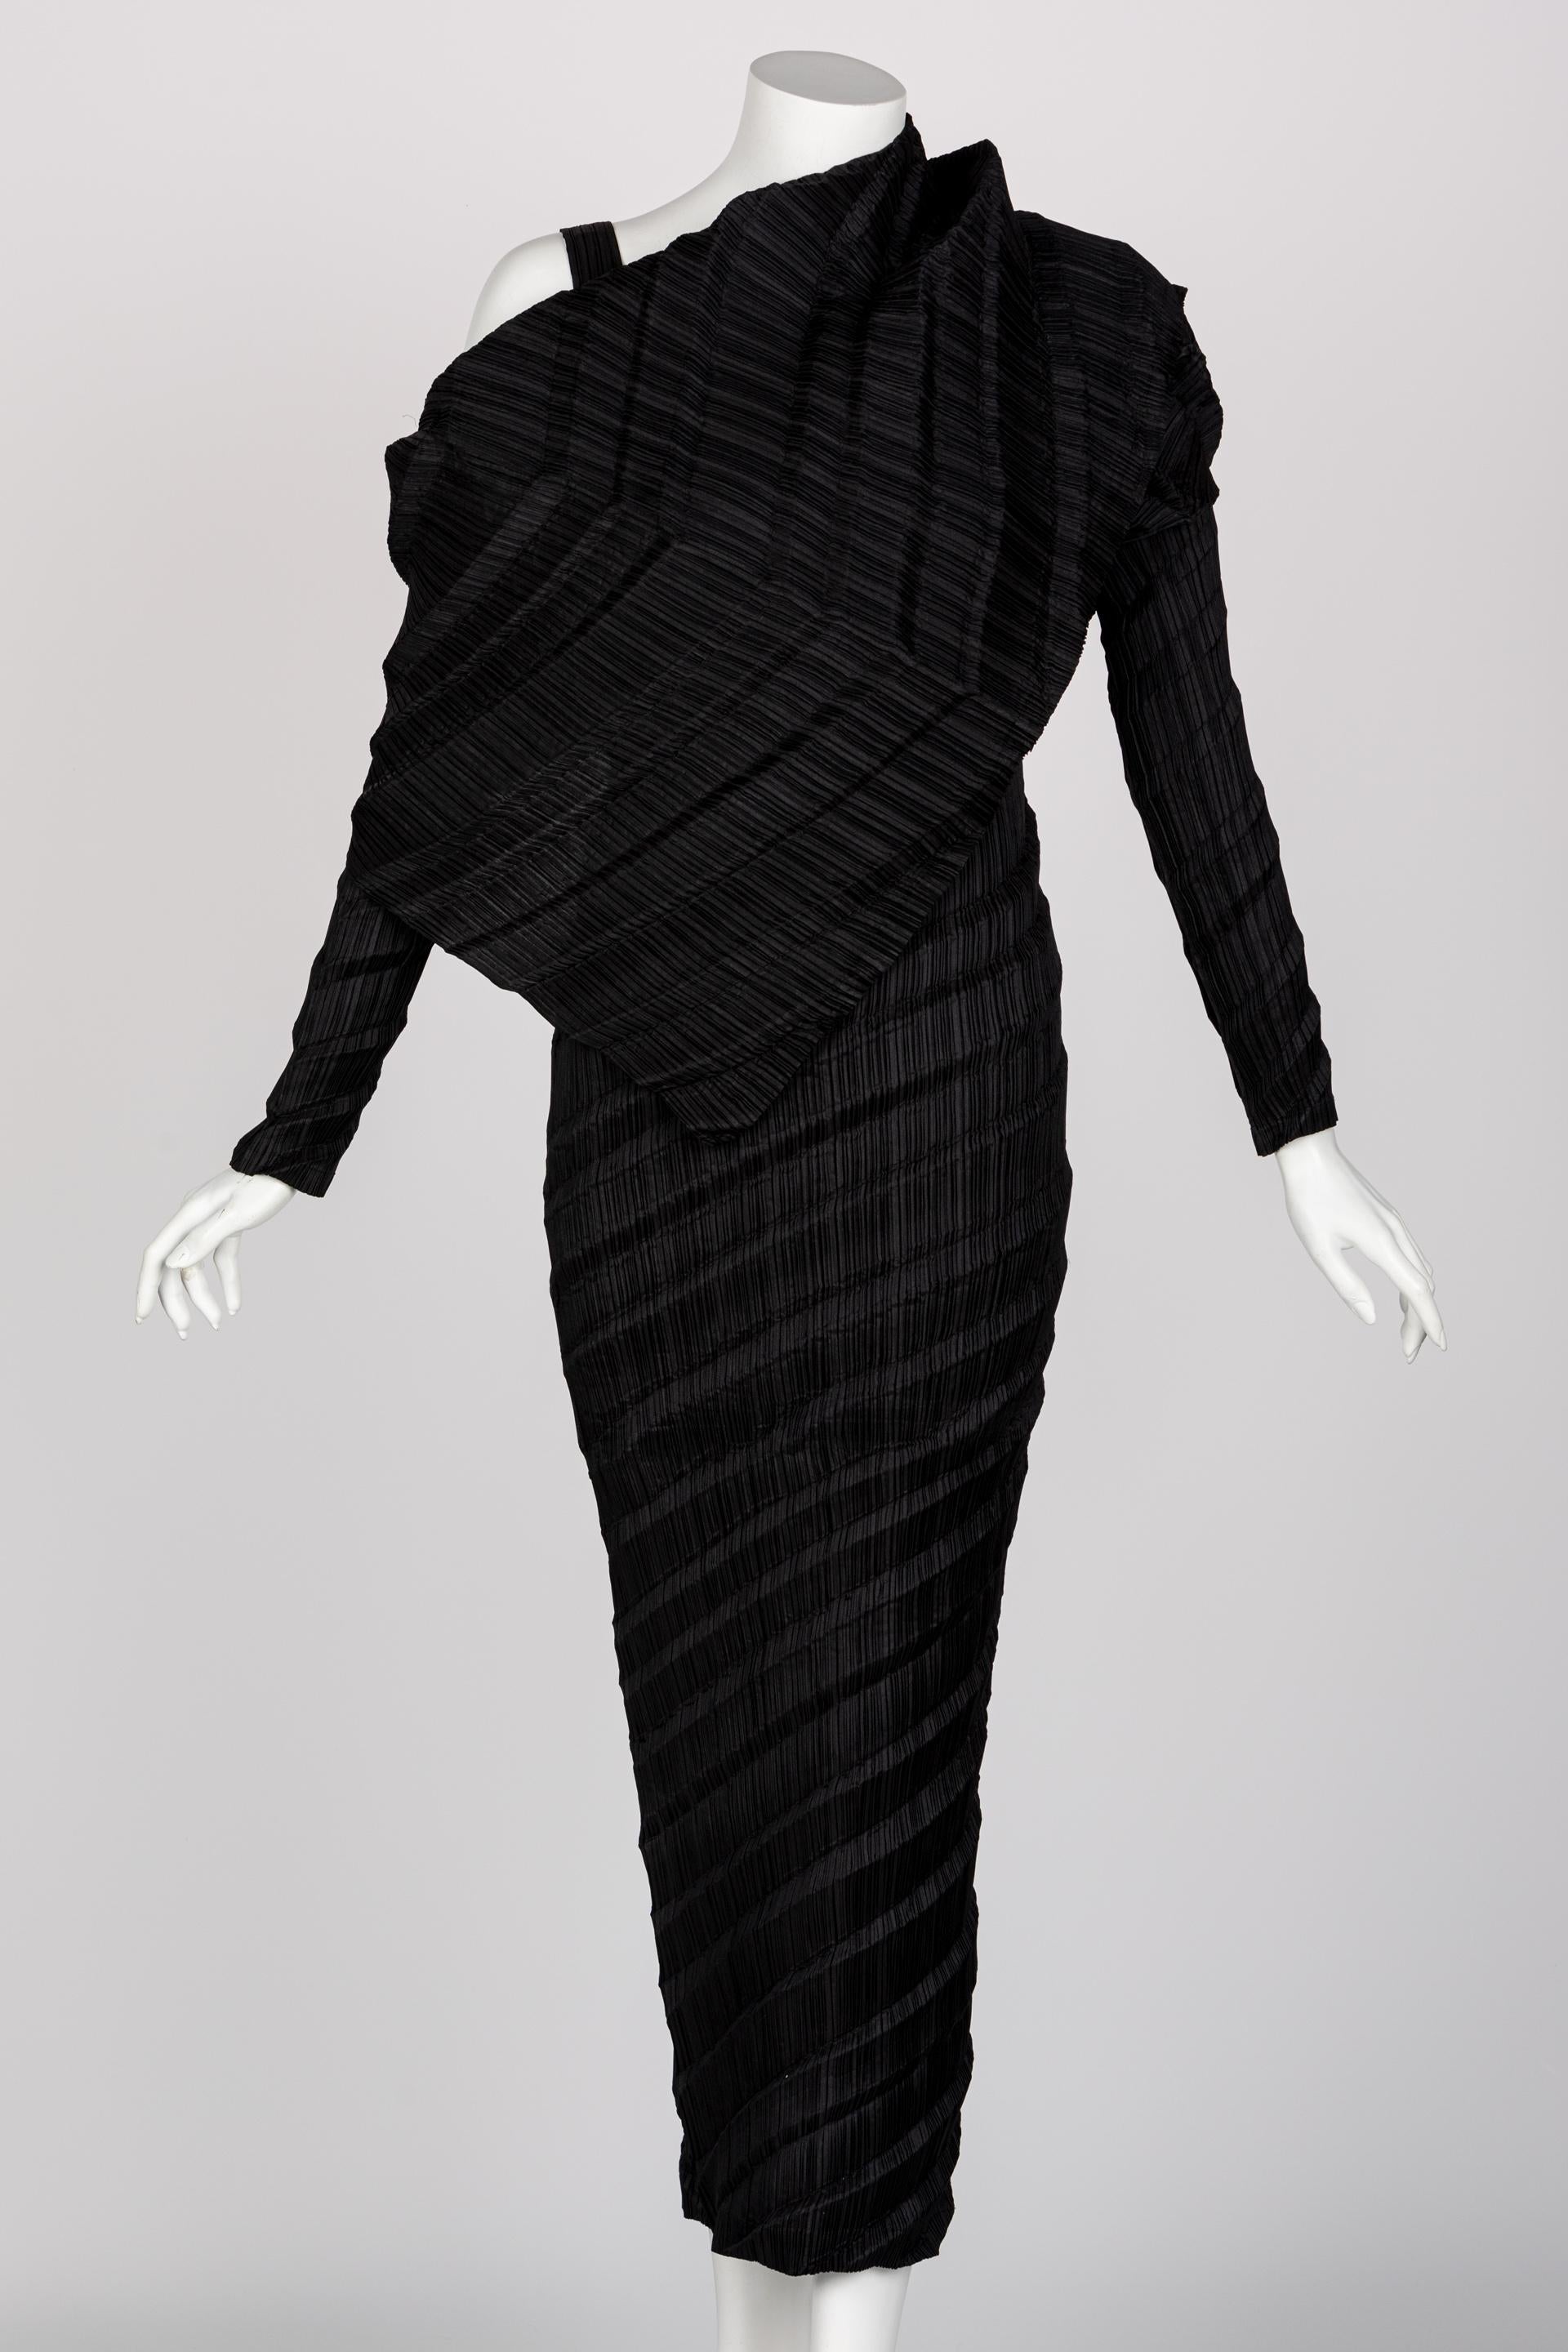 Issey Miyake Black Pleated Sculptural Dress, 1990s 4